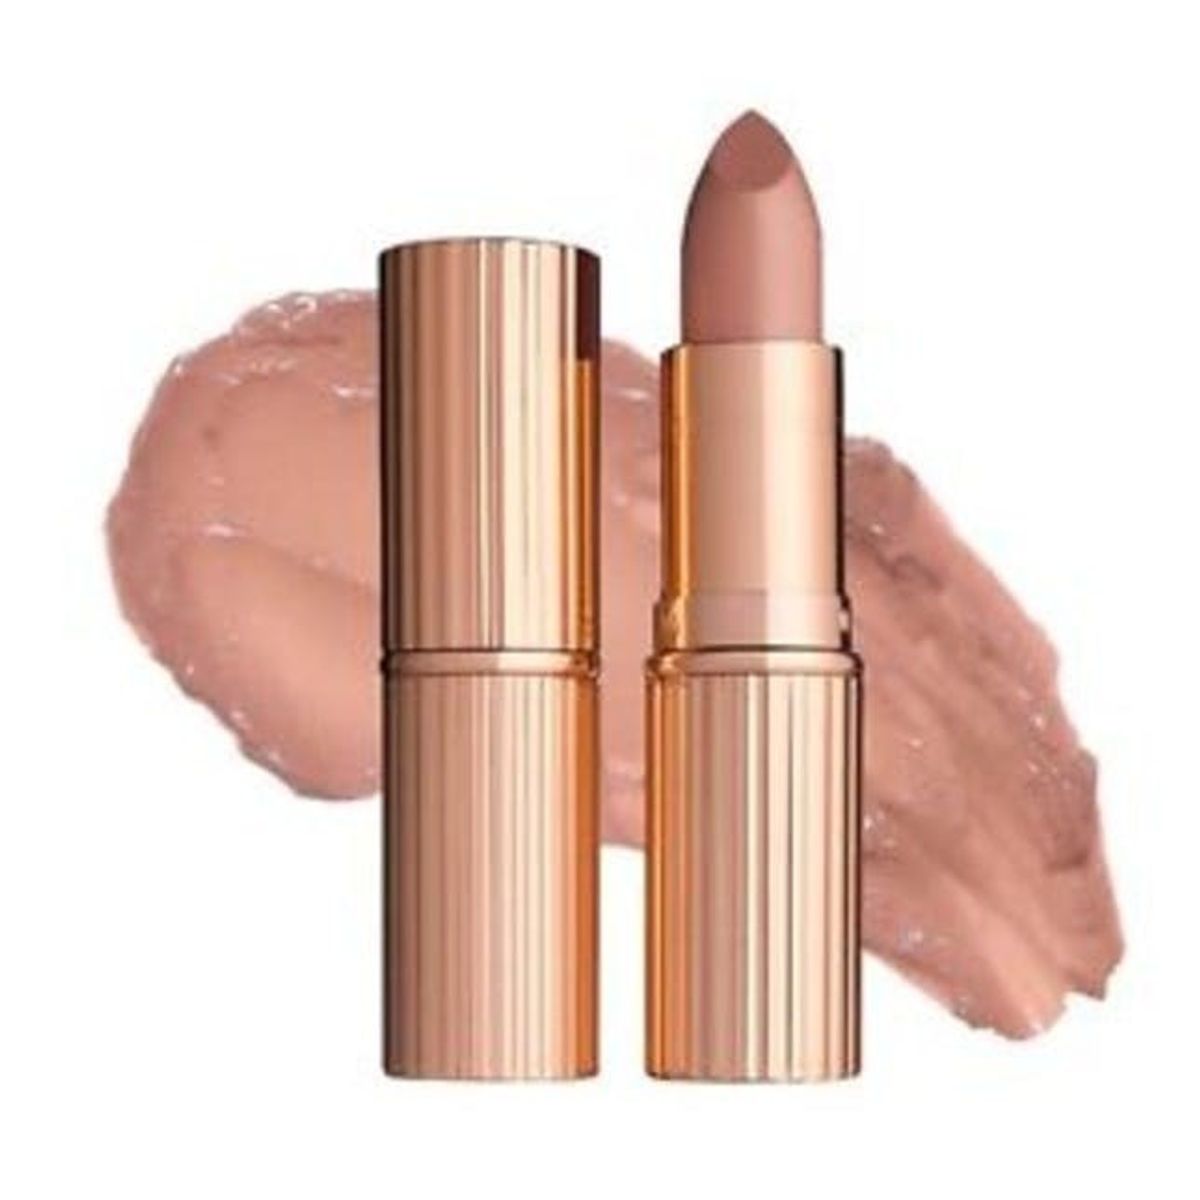 12 Nude Lipsticks to Add to Your Fall Makeup Bag